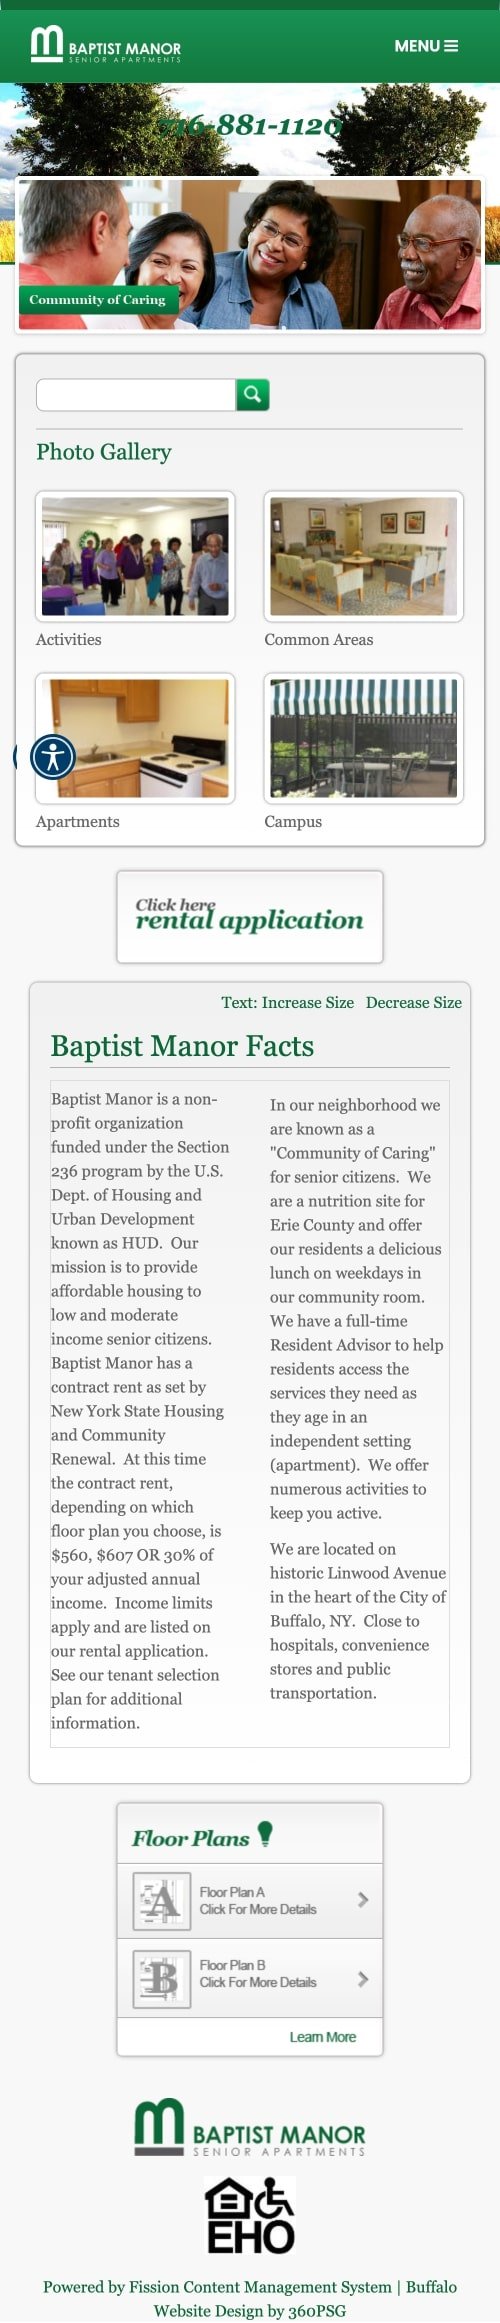 Baptist Manor Website - Mobile